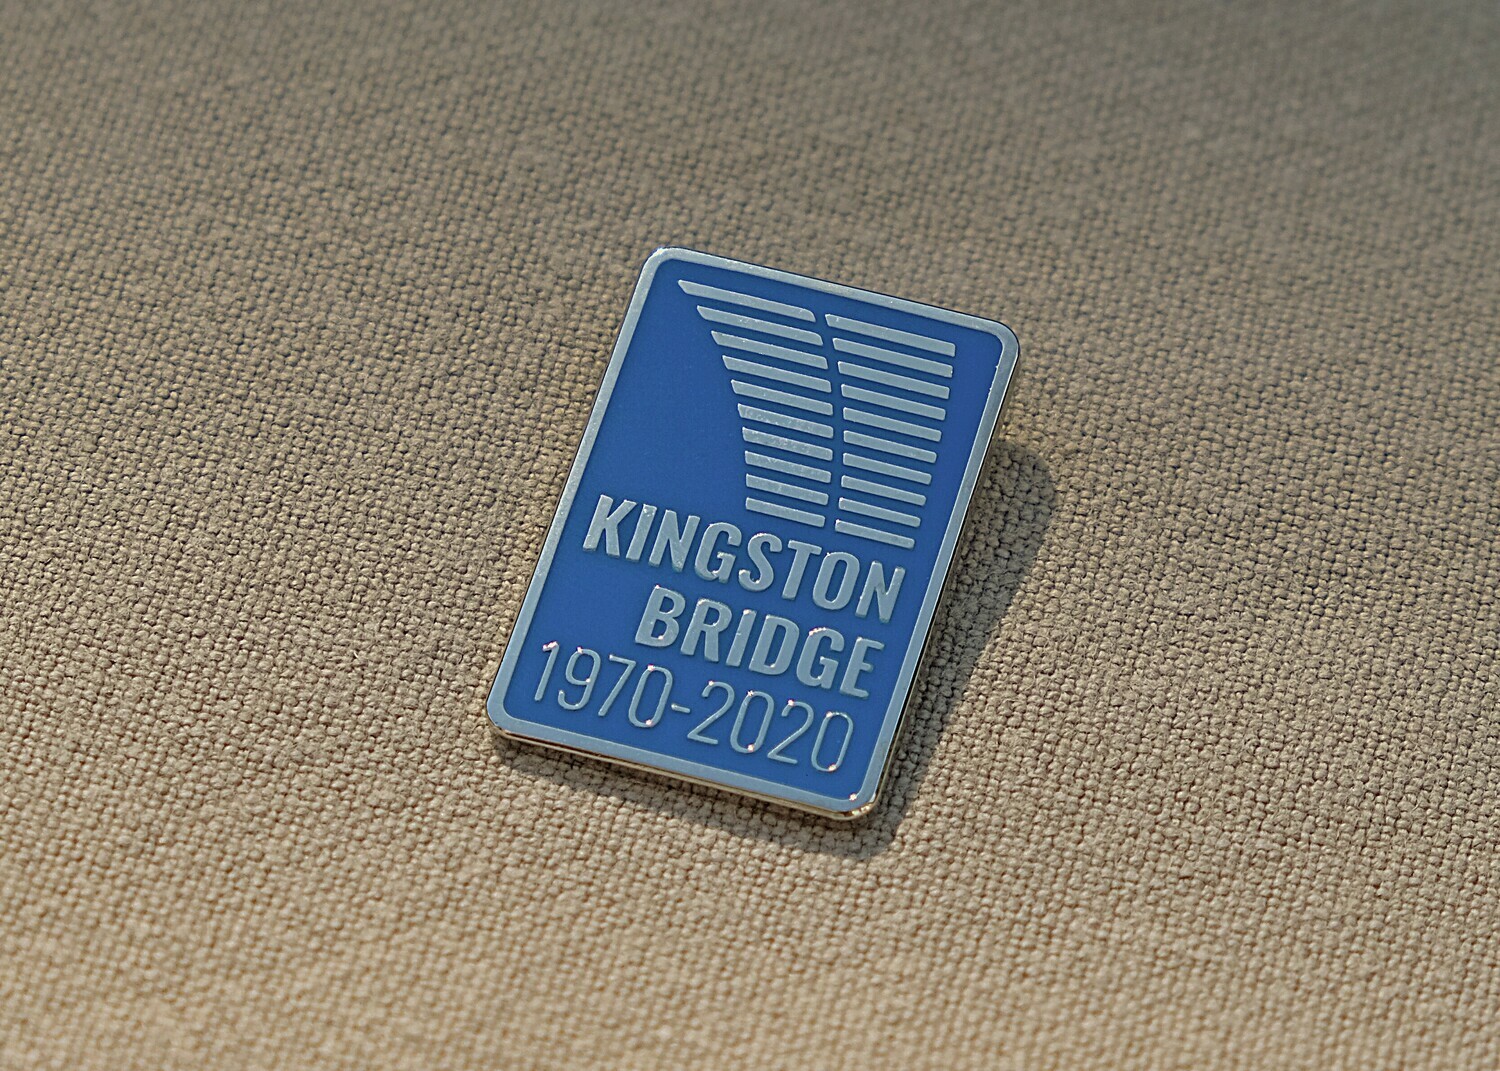 Kingston Bridge - 50th Anniversary Enamel Badge (Limited Quantity)